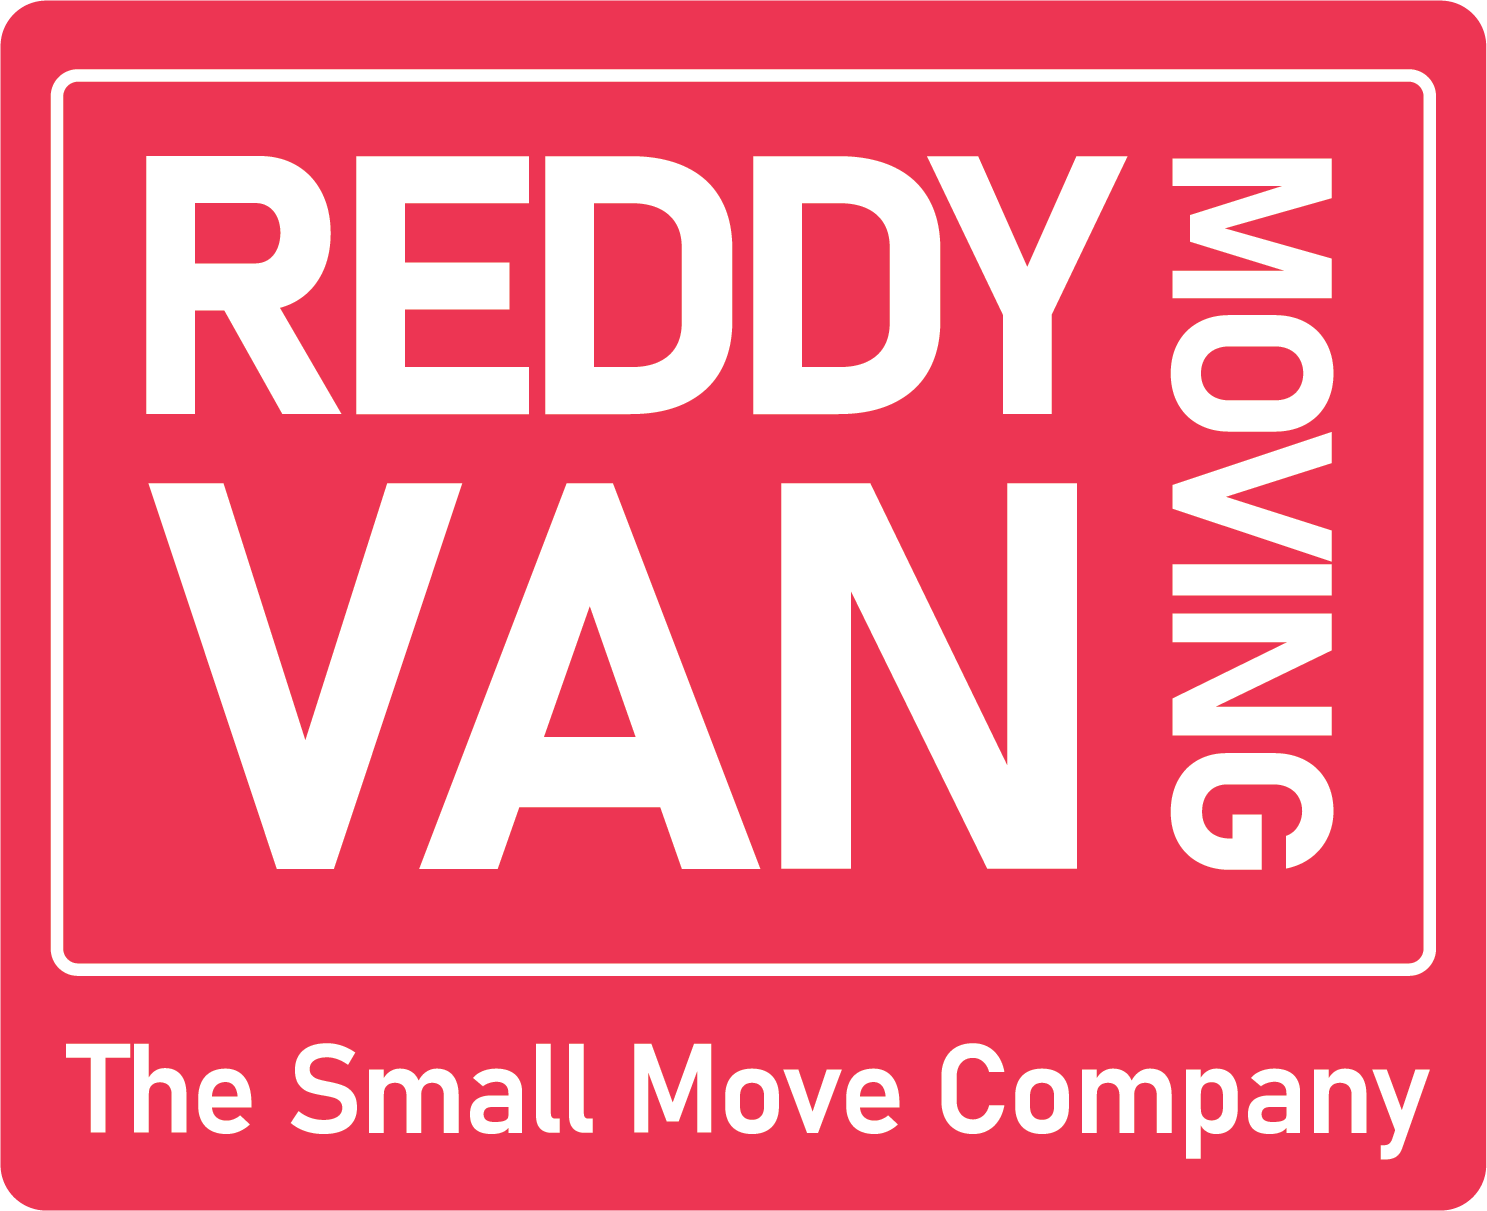 reddy van moving logo